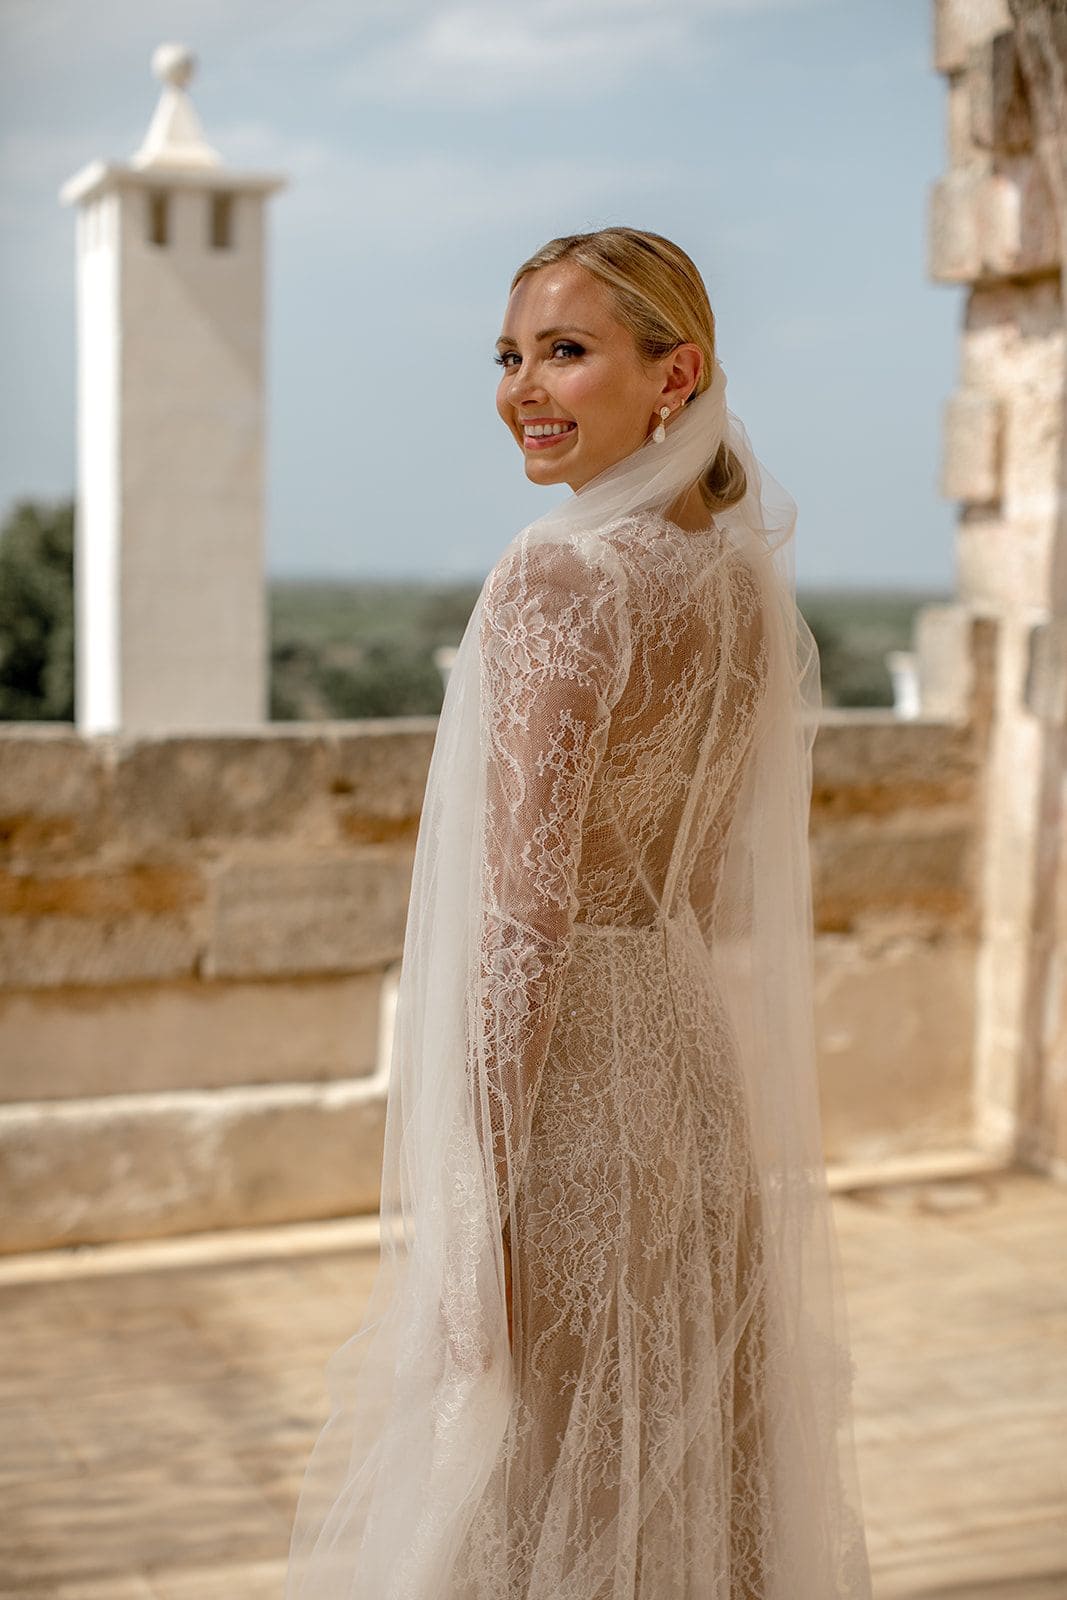 Bride wears lace wedding gown